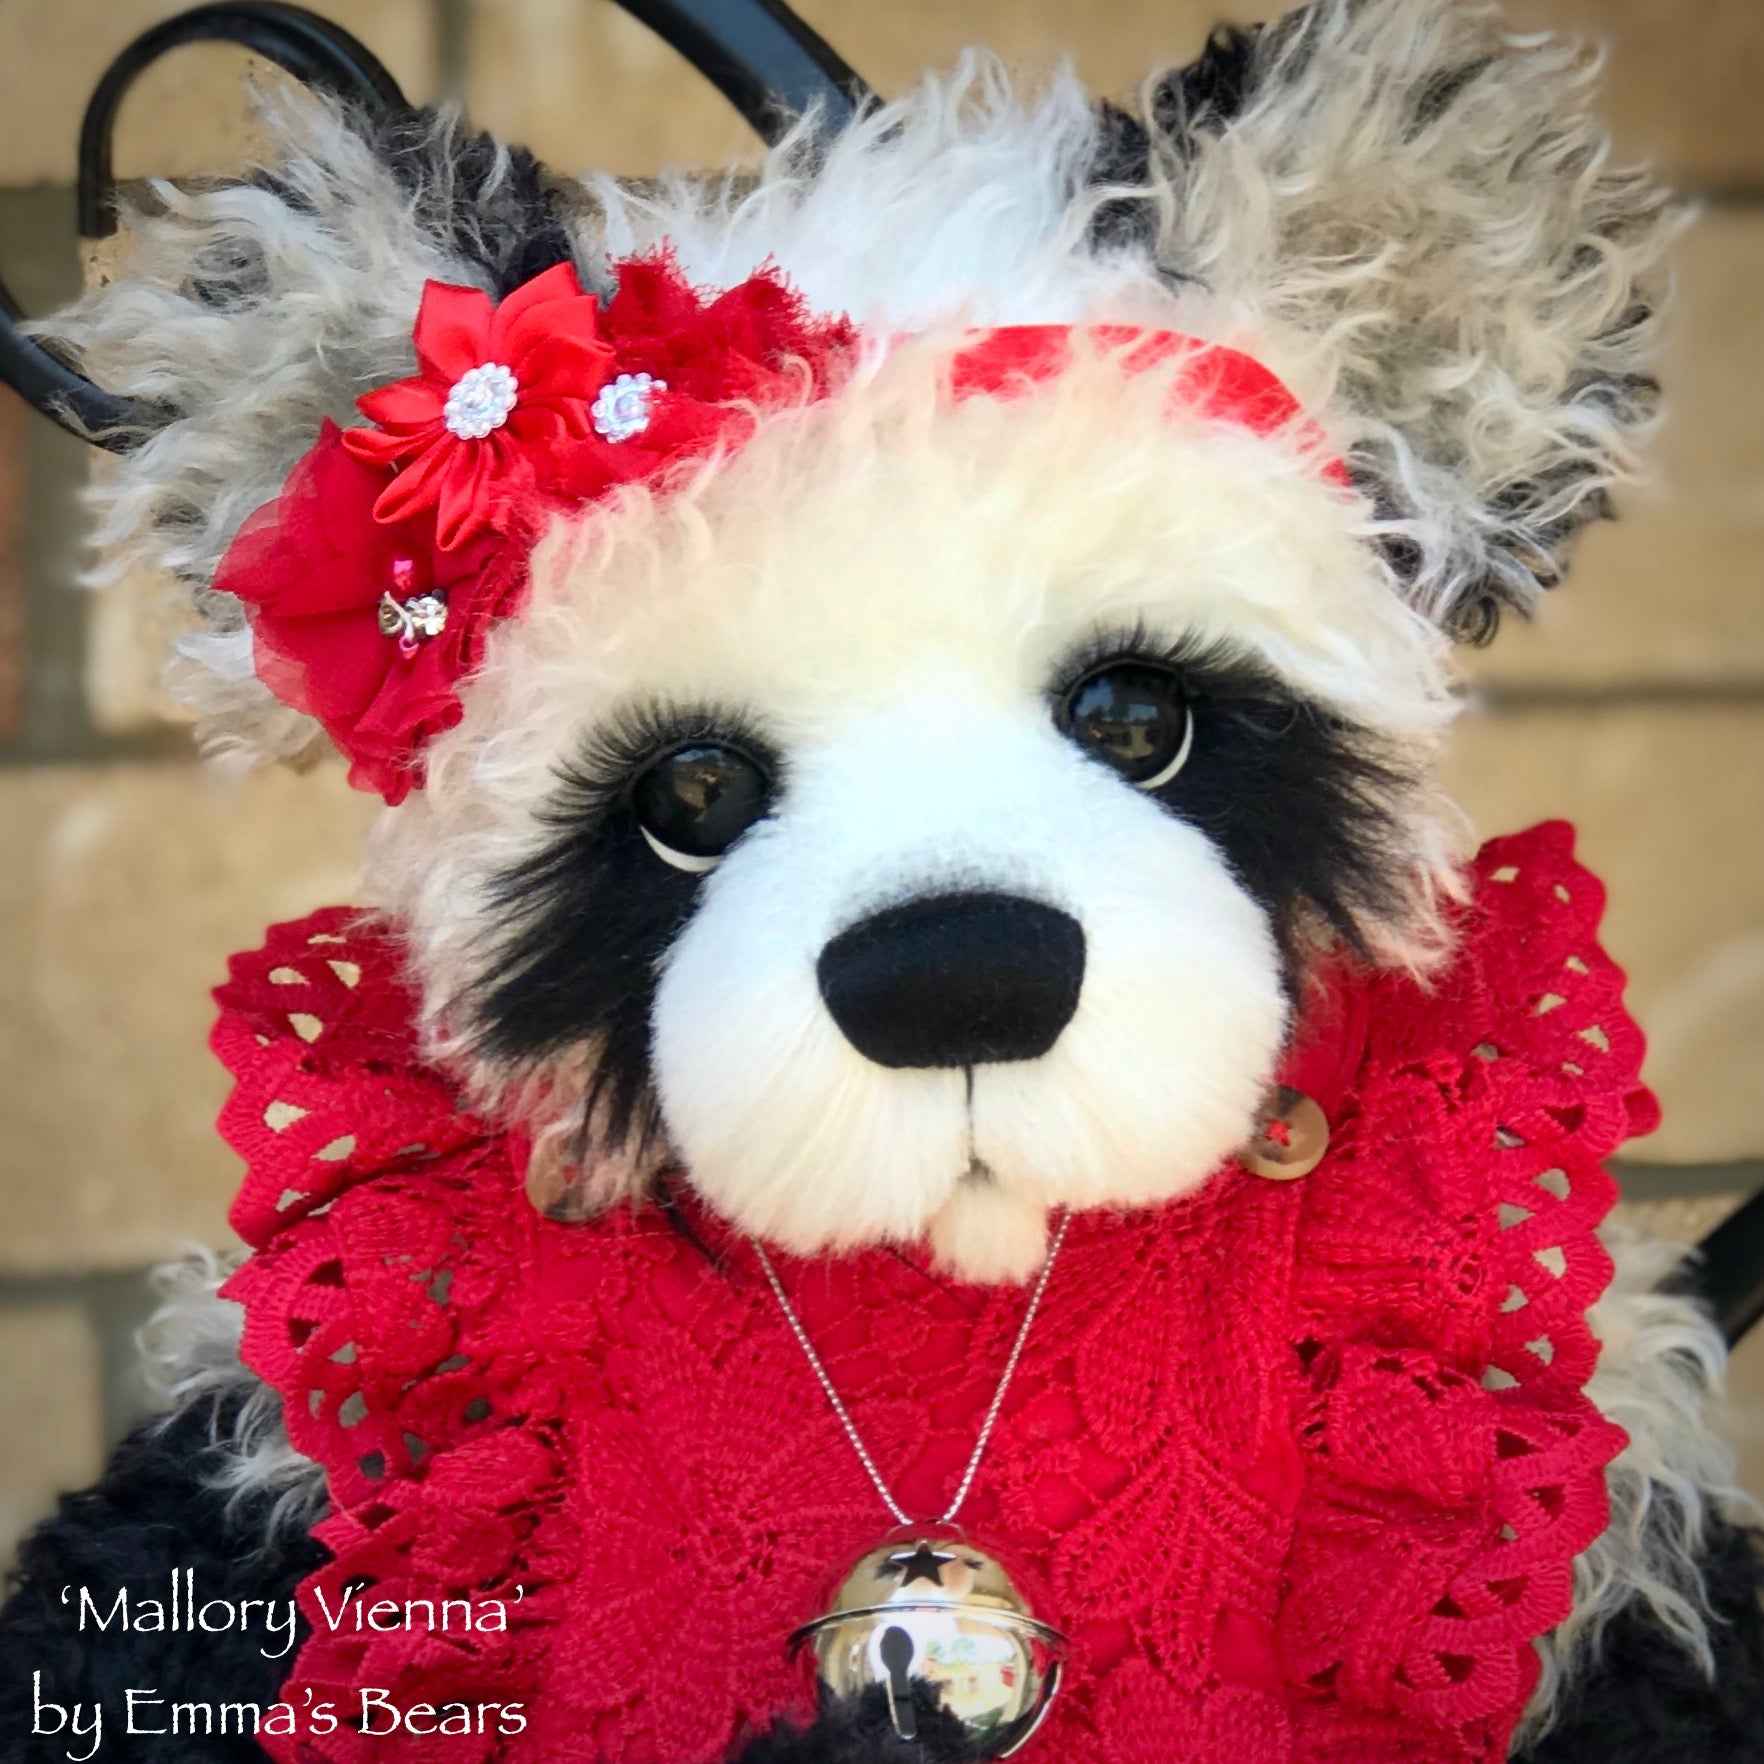 Mallory Vienna - 19" Christmas 2019 Toddler Artist Bear by Emma's Bears - OOAK